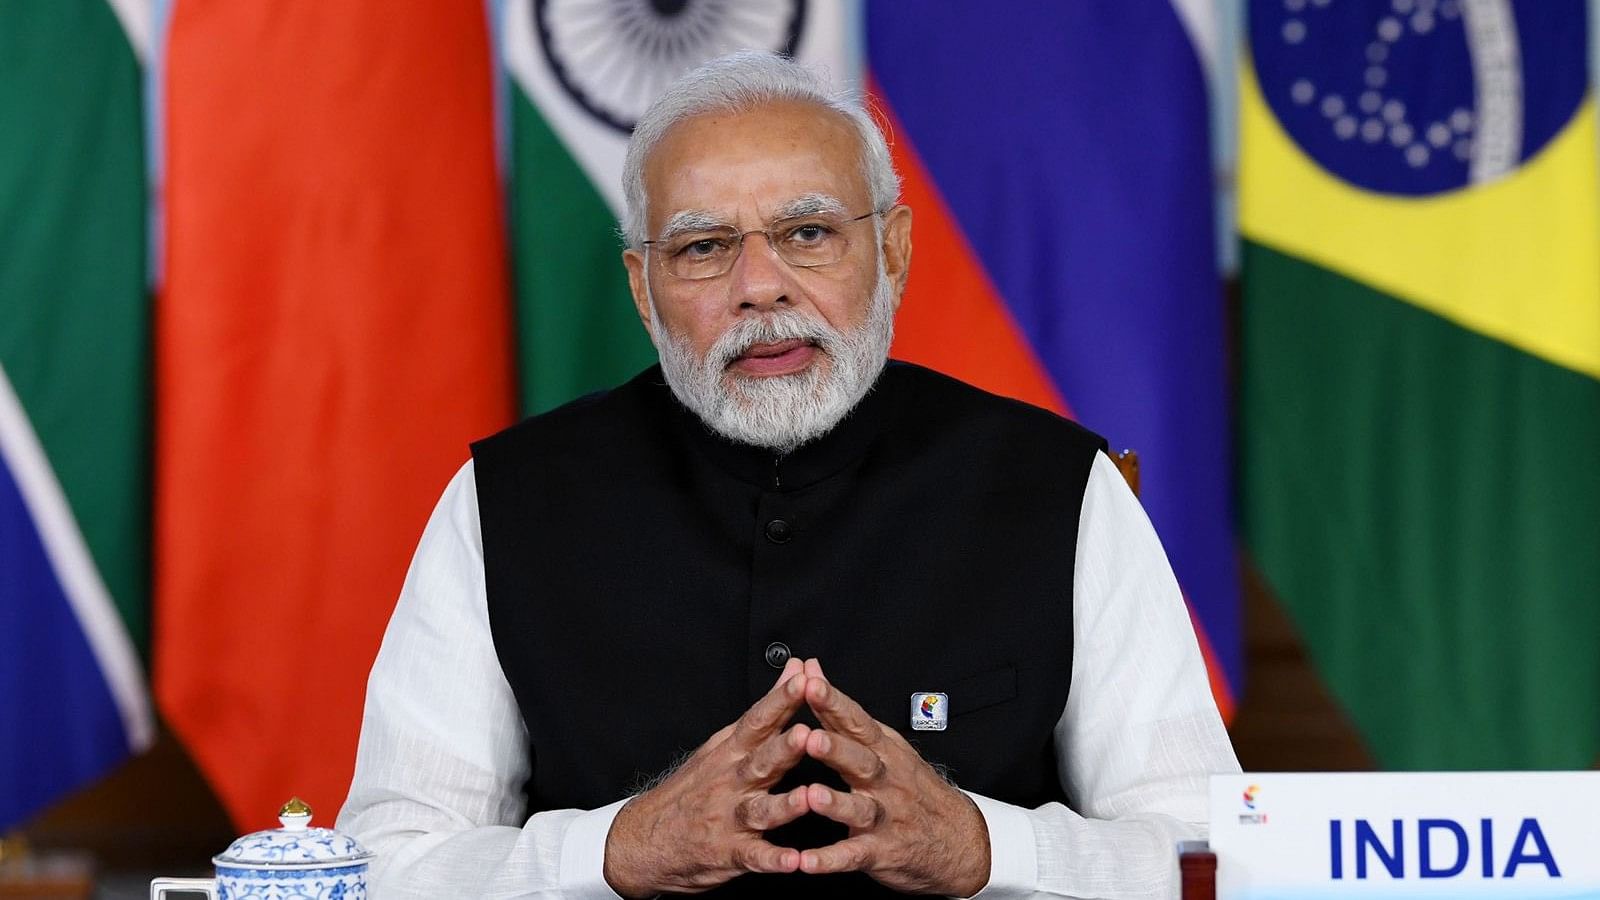 <div class="paragraphs"><p>PM Modi addressing the 14th BRICS summit in 2022.&nbsp;</p></div>